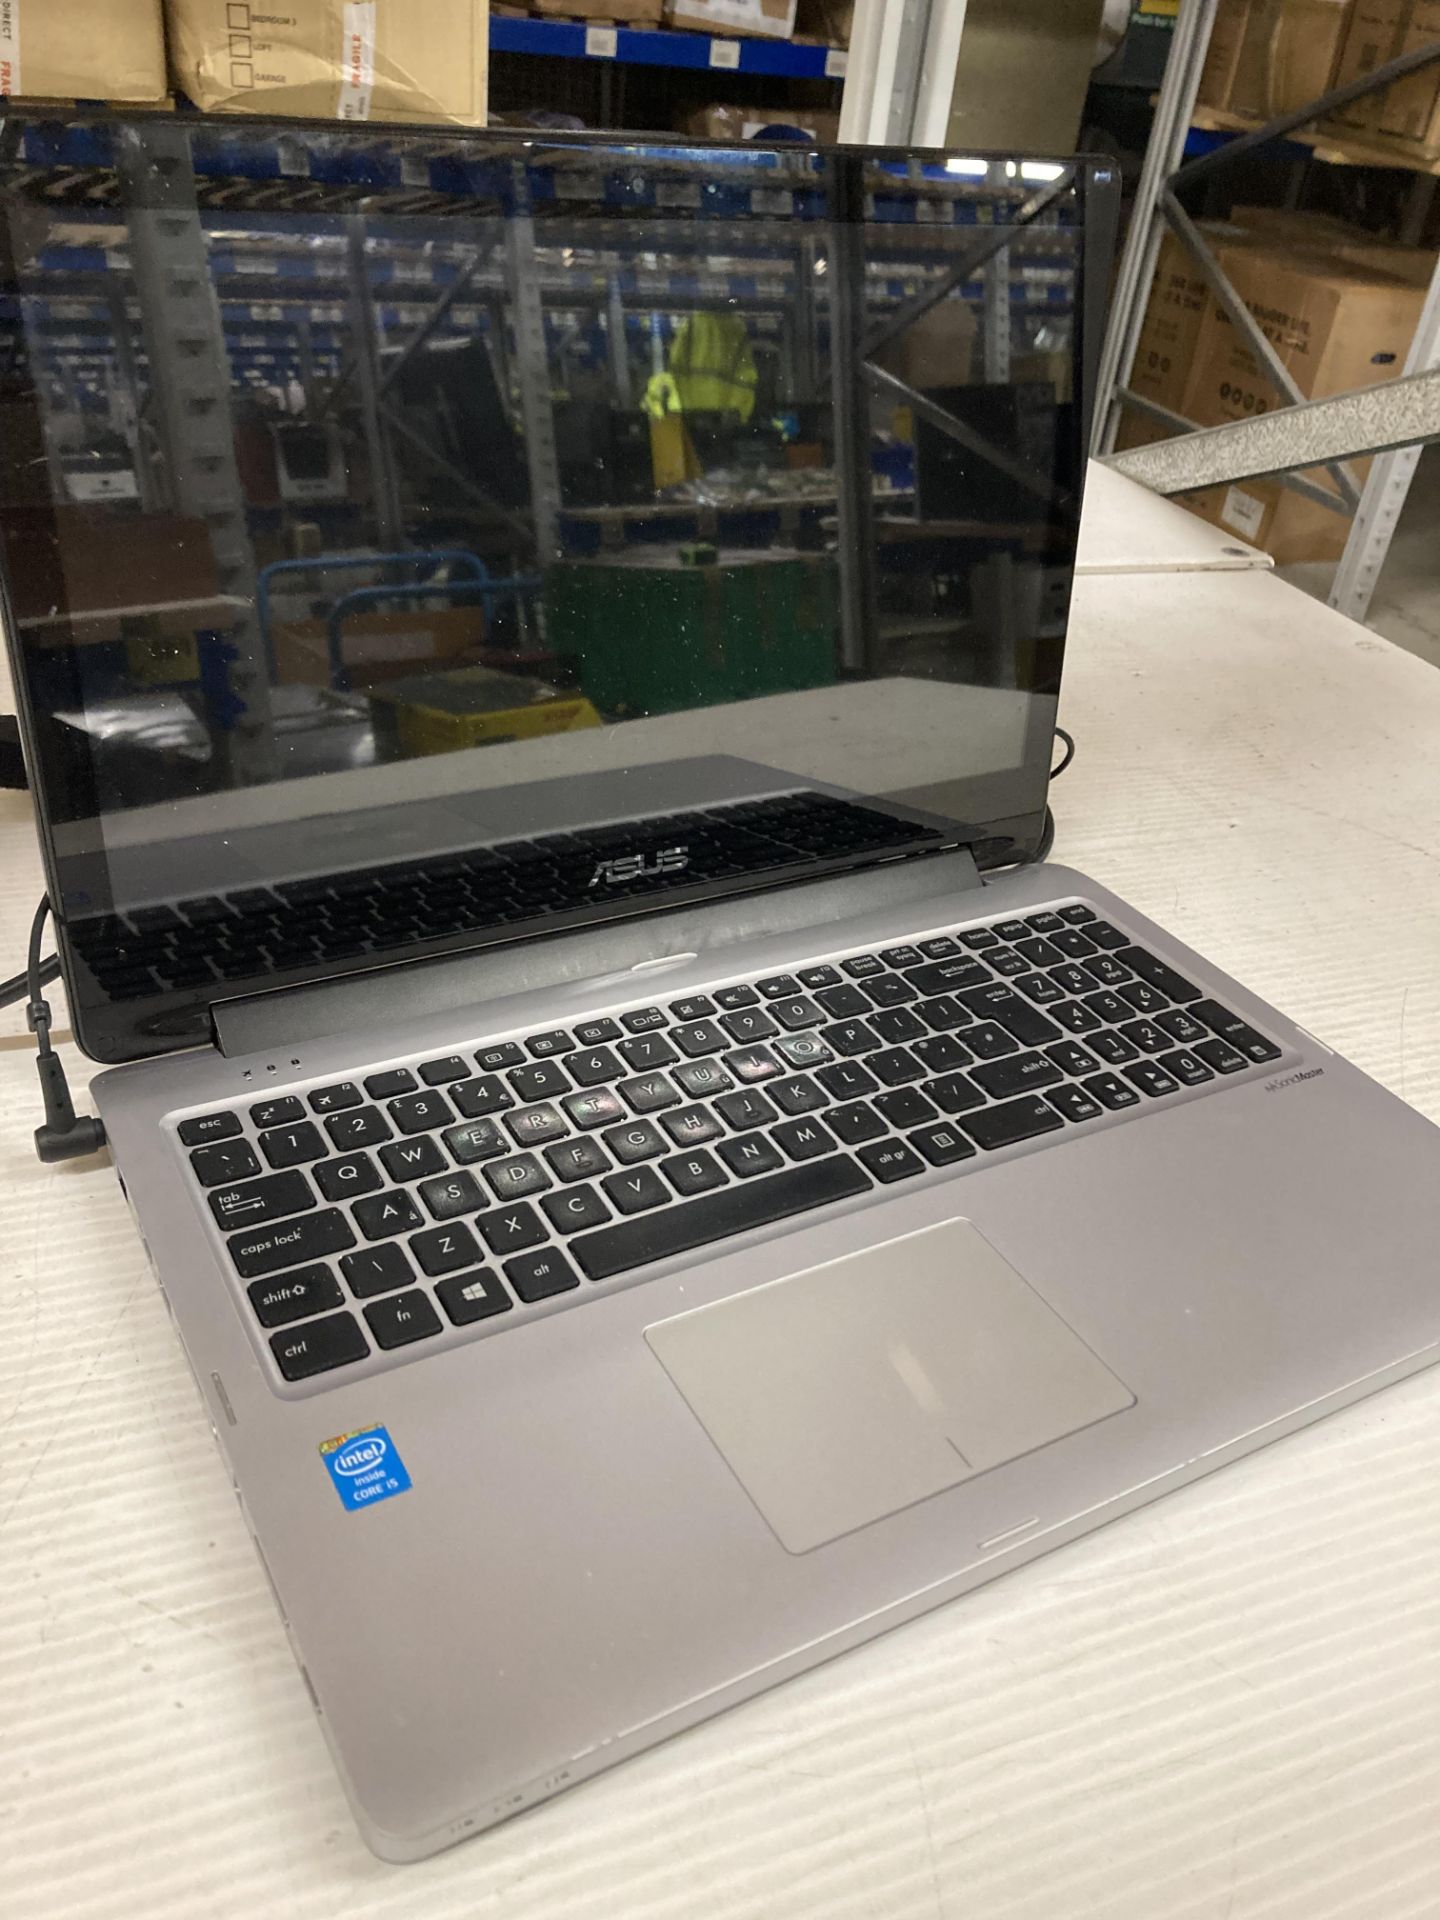 Asus laptop I5-4200U complete with power lead (saleroom location: F10) - Image 2 of 2